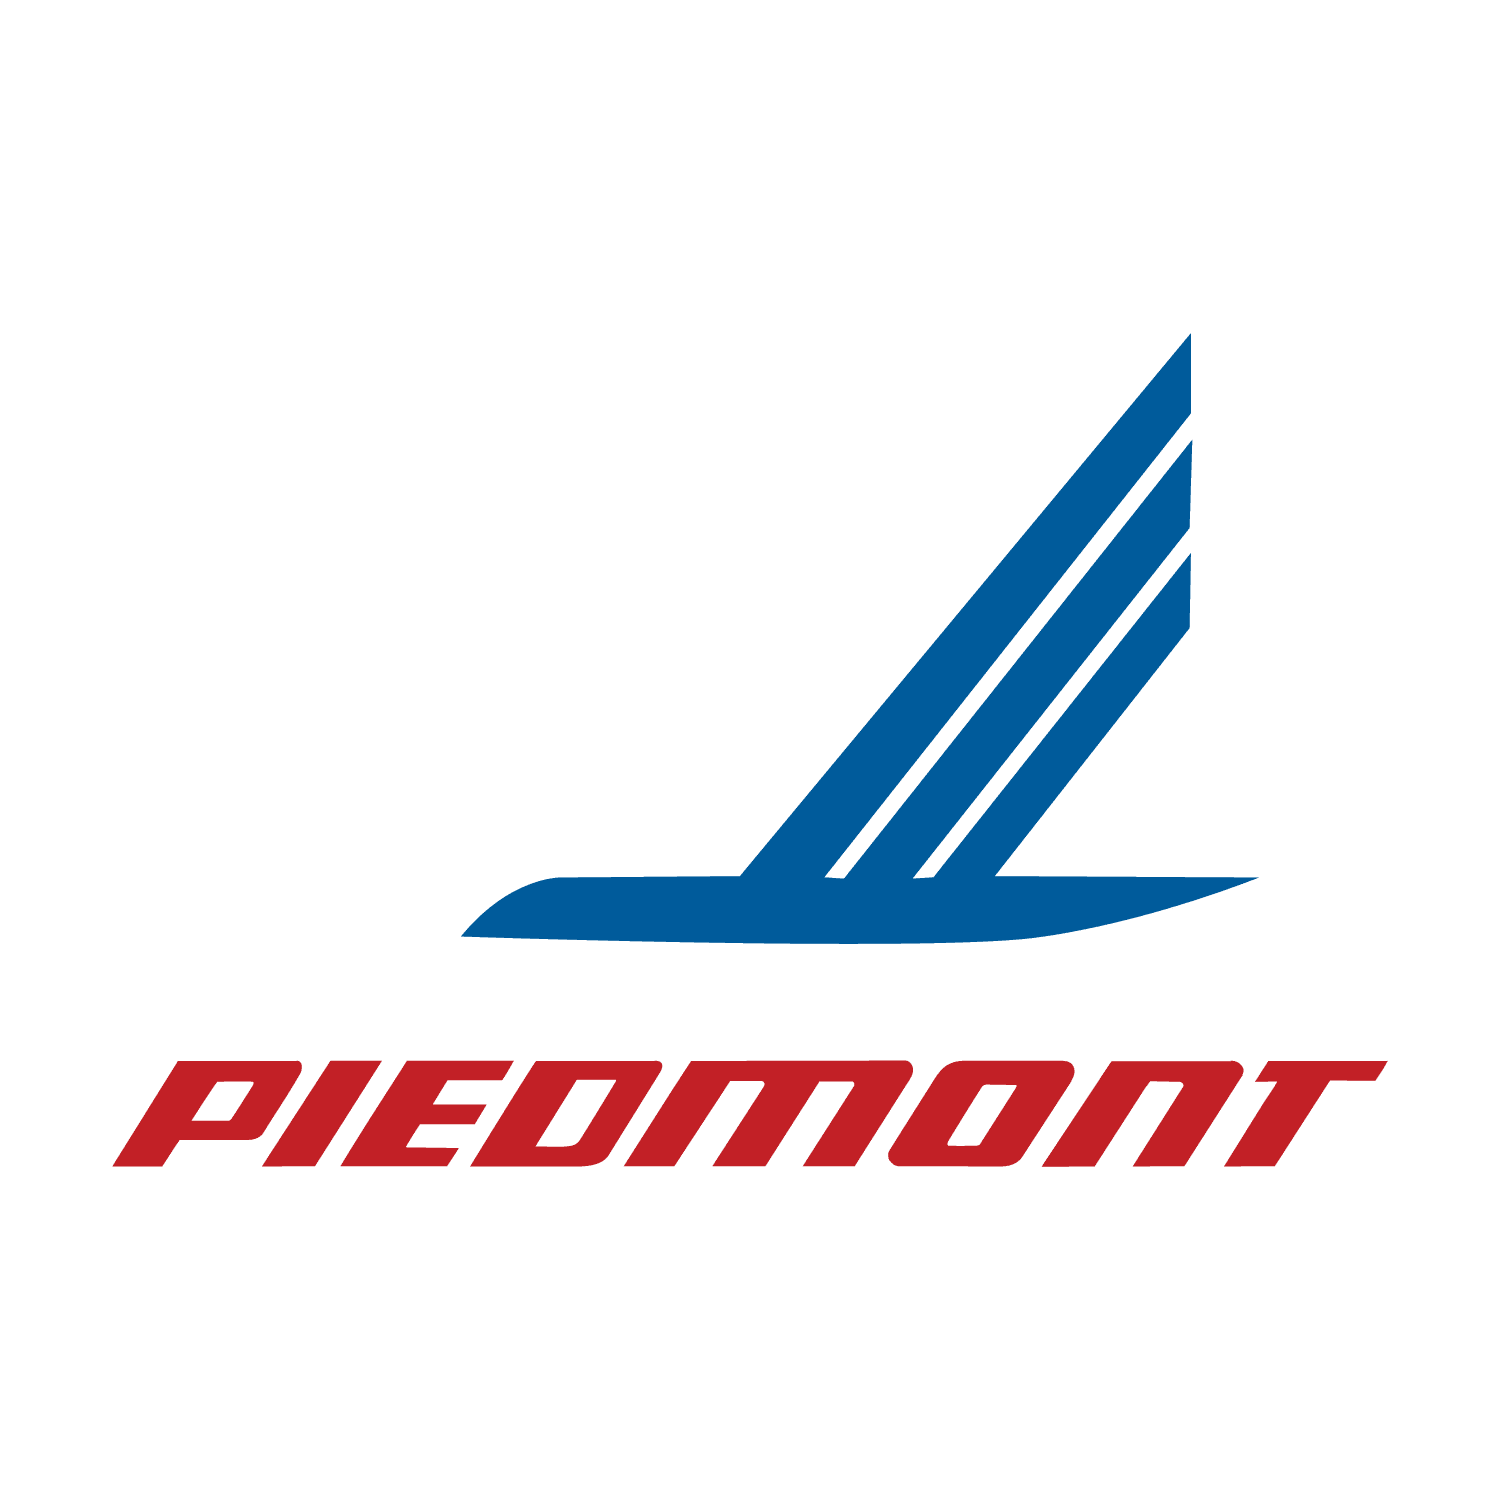 Piedmont Airlines logo